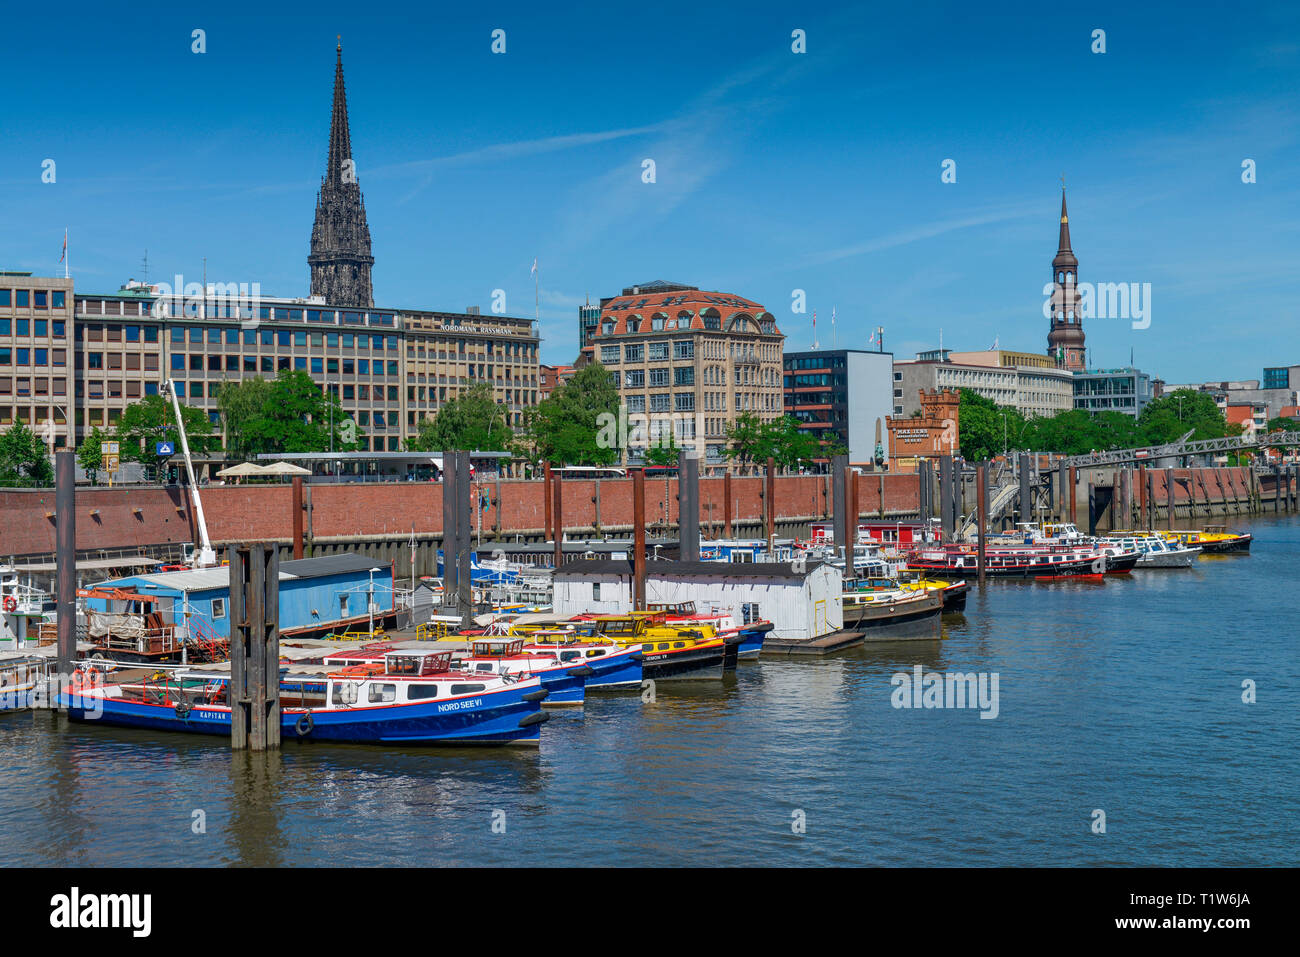 Barkassen, Binnenhafen, Hohe Bruecke, Amburgo, Deutschland Foto Stock